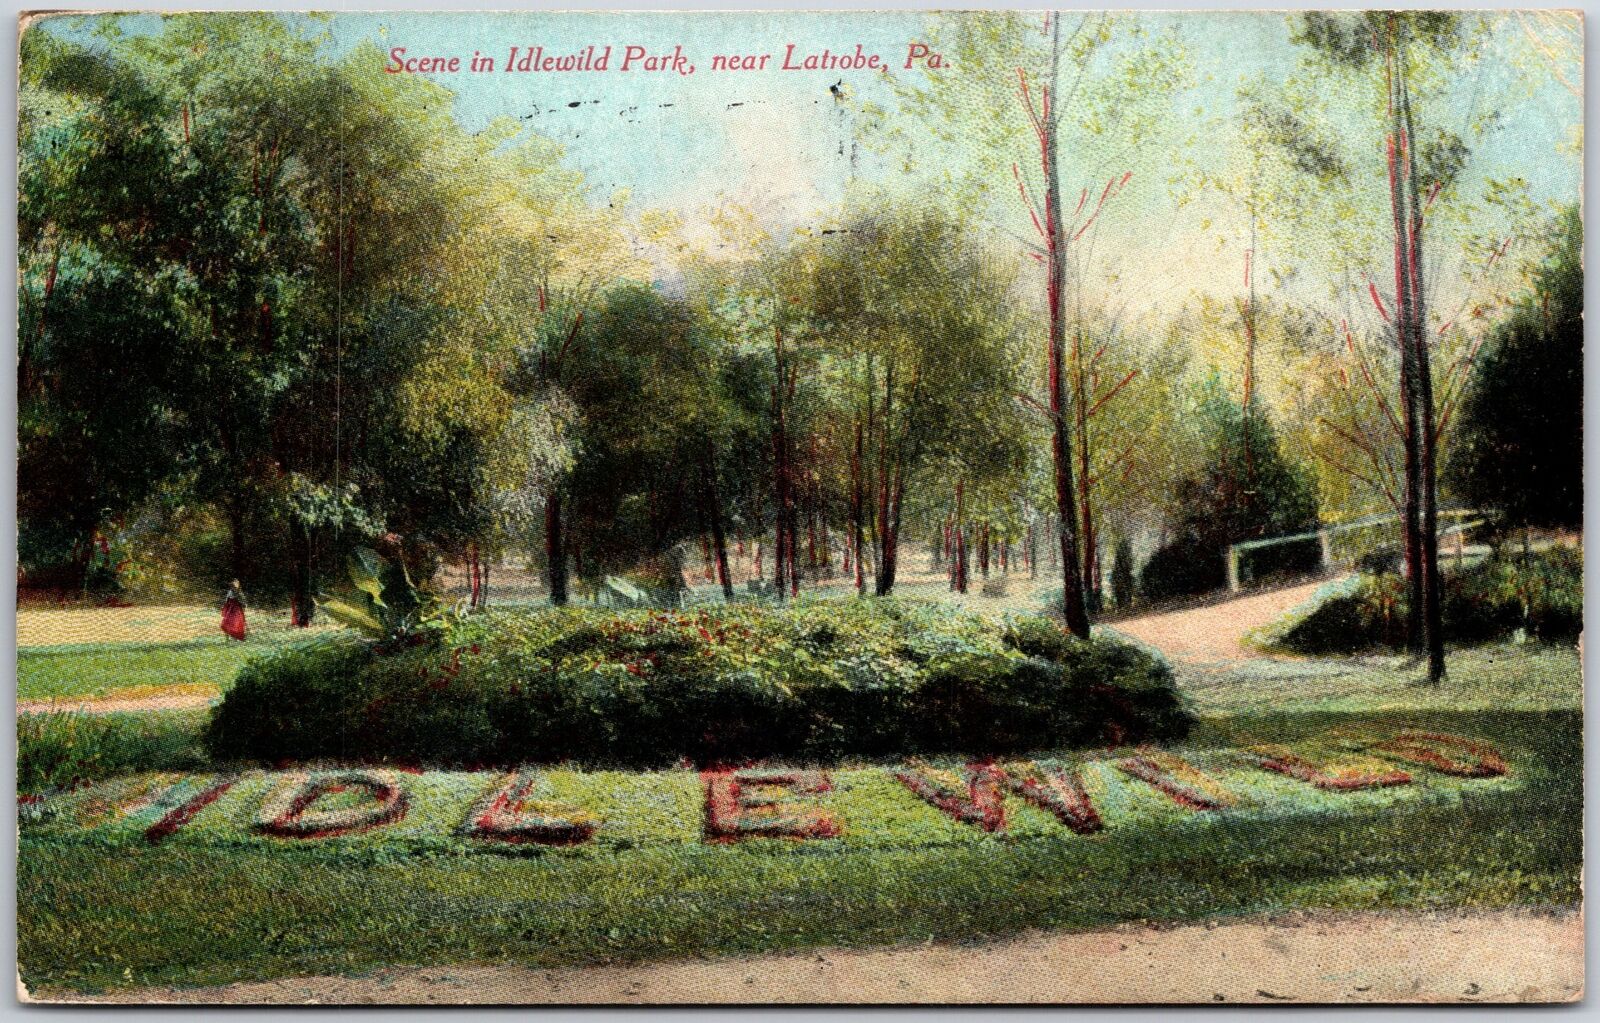 Latrobe Pennsylvania, 1908 Scene in Idlewild Park, Green Grass, Vintage Postcard